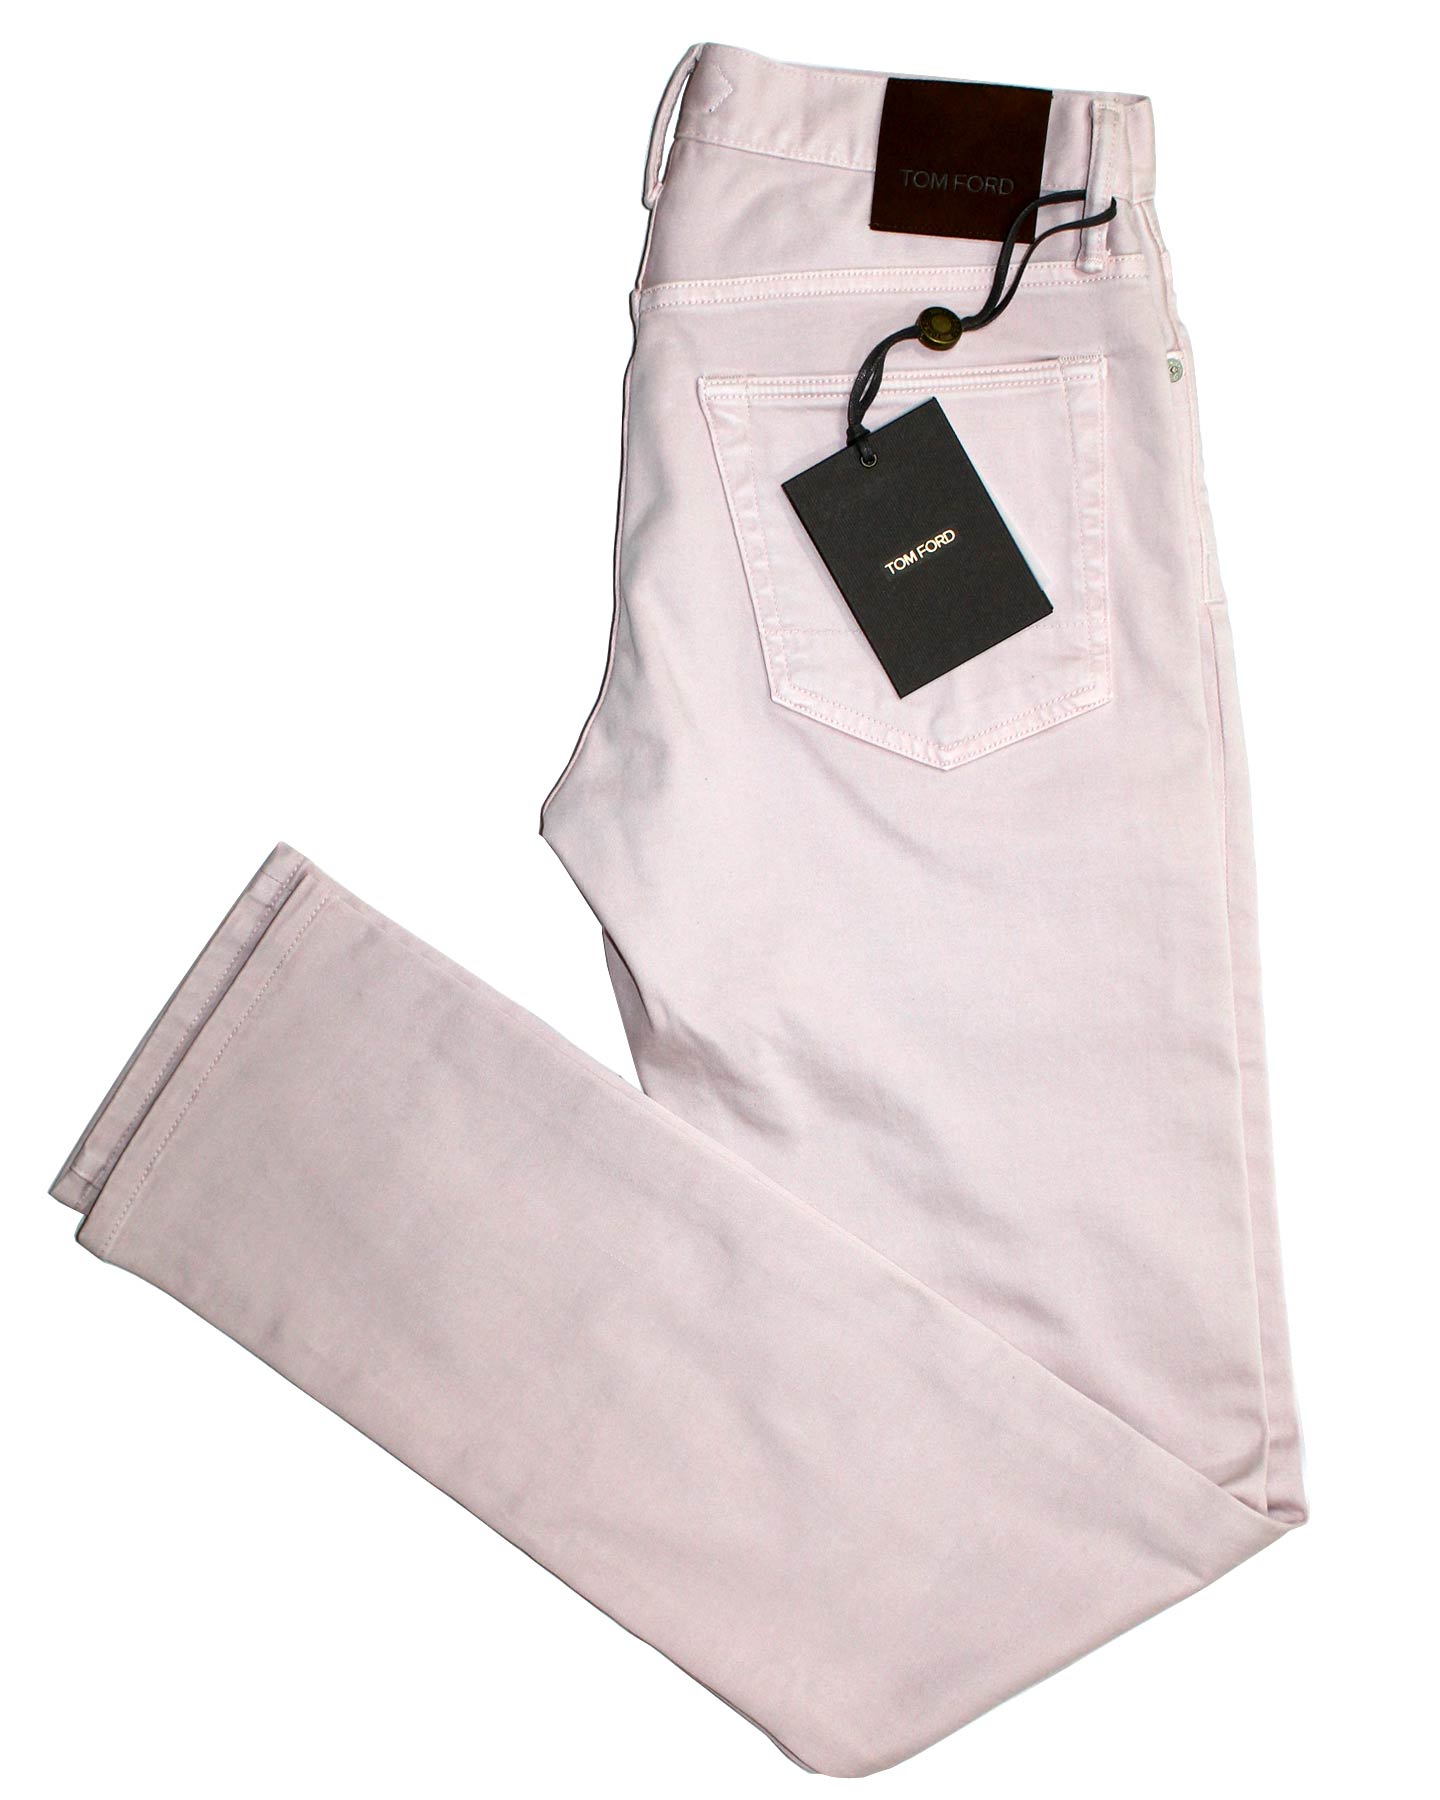 Tom Ford Pants Light Pink 5 Pocket - 31 Straight Legs - Tie Deals